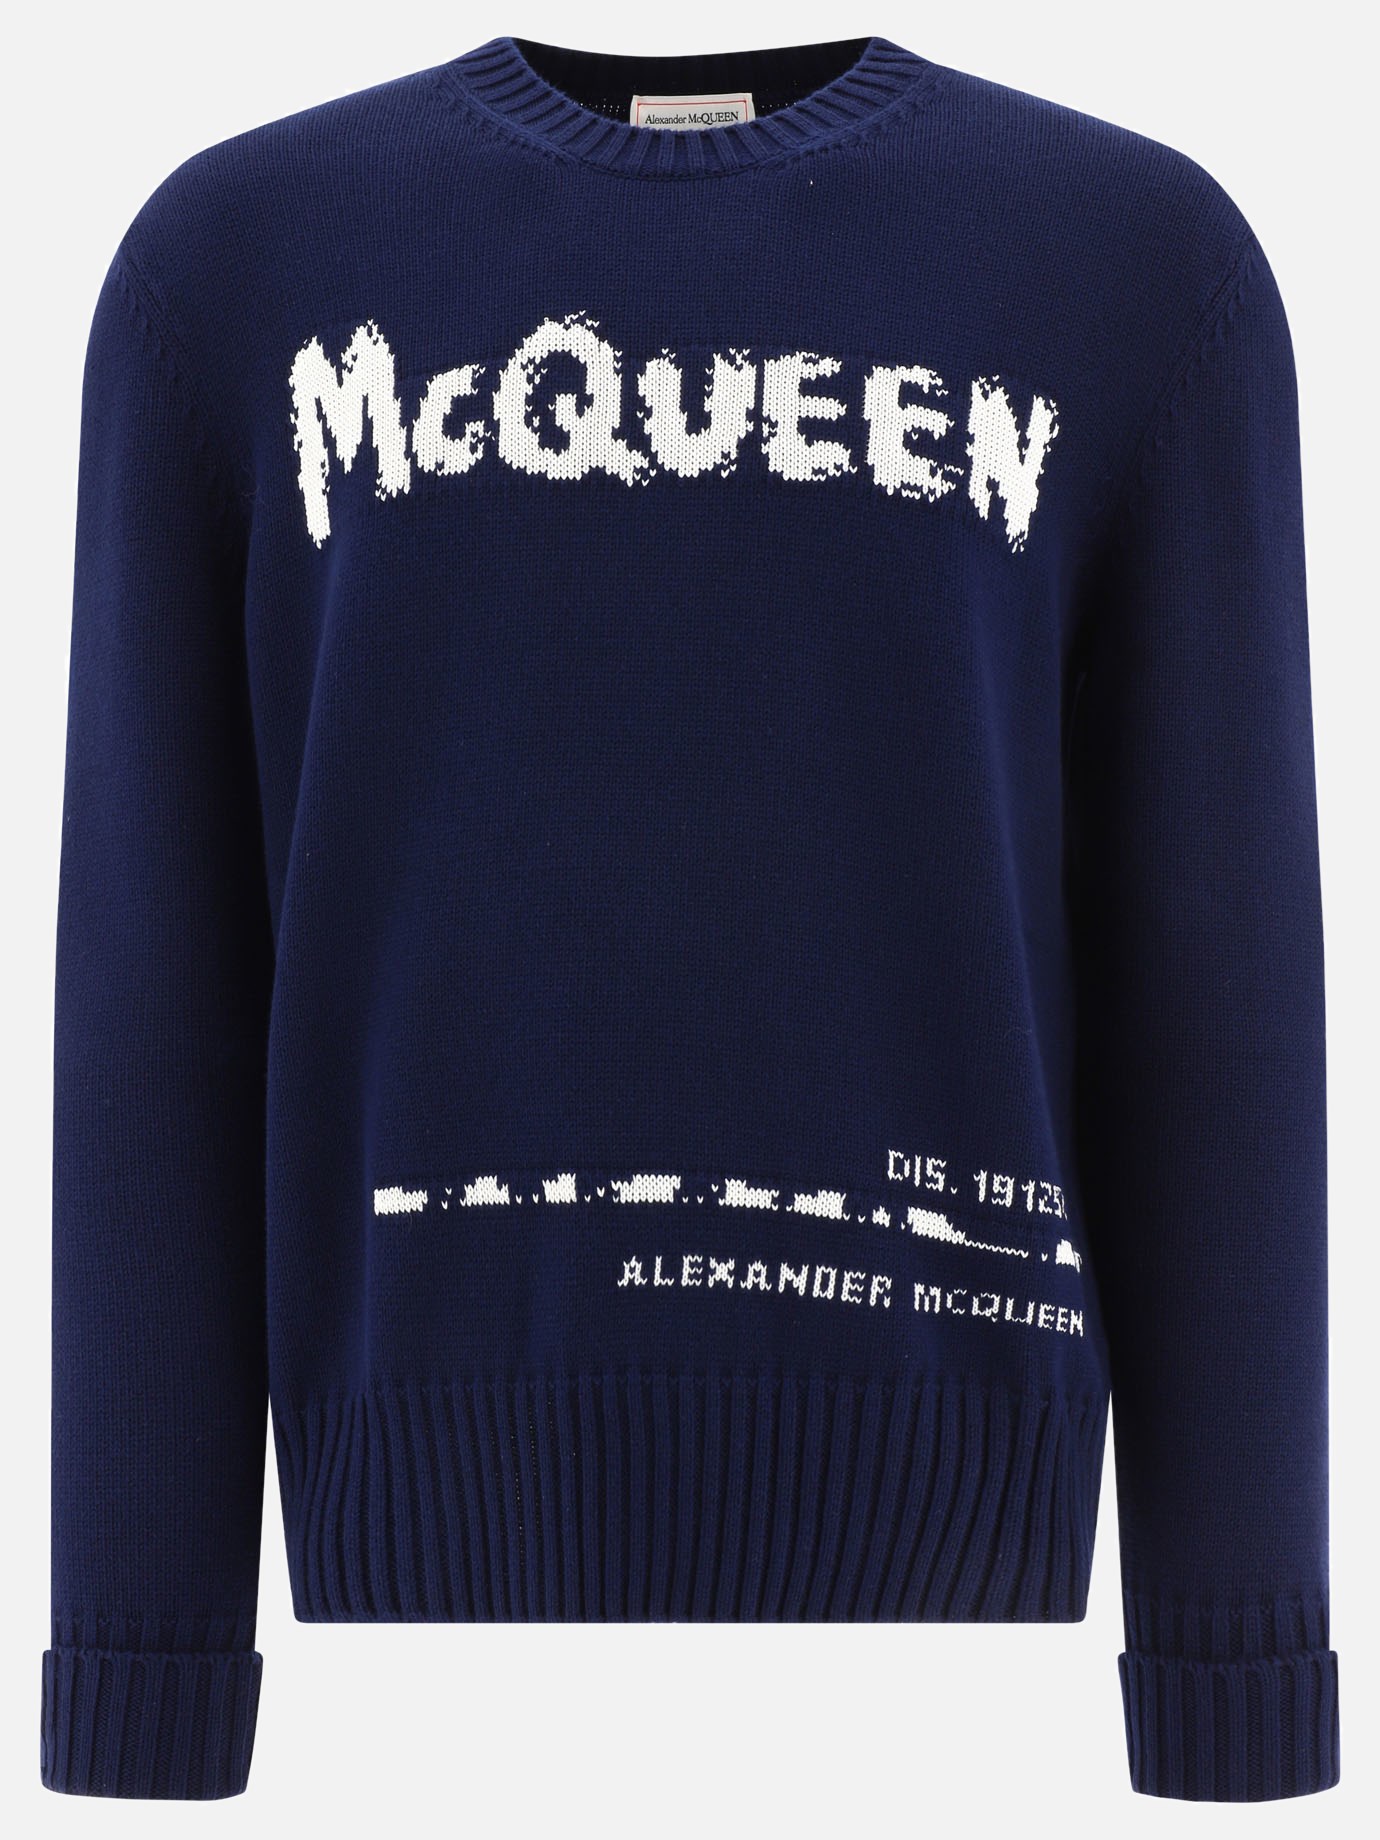  Graffiti sweaterby Alexander McQueen - 2